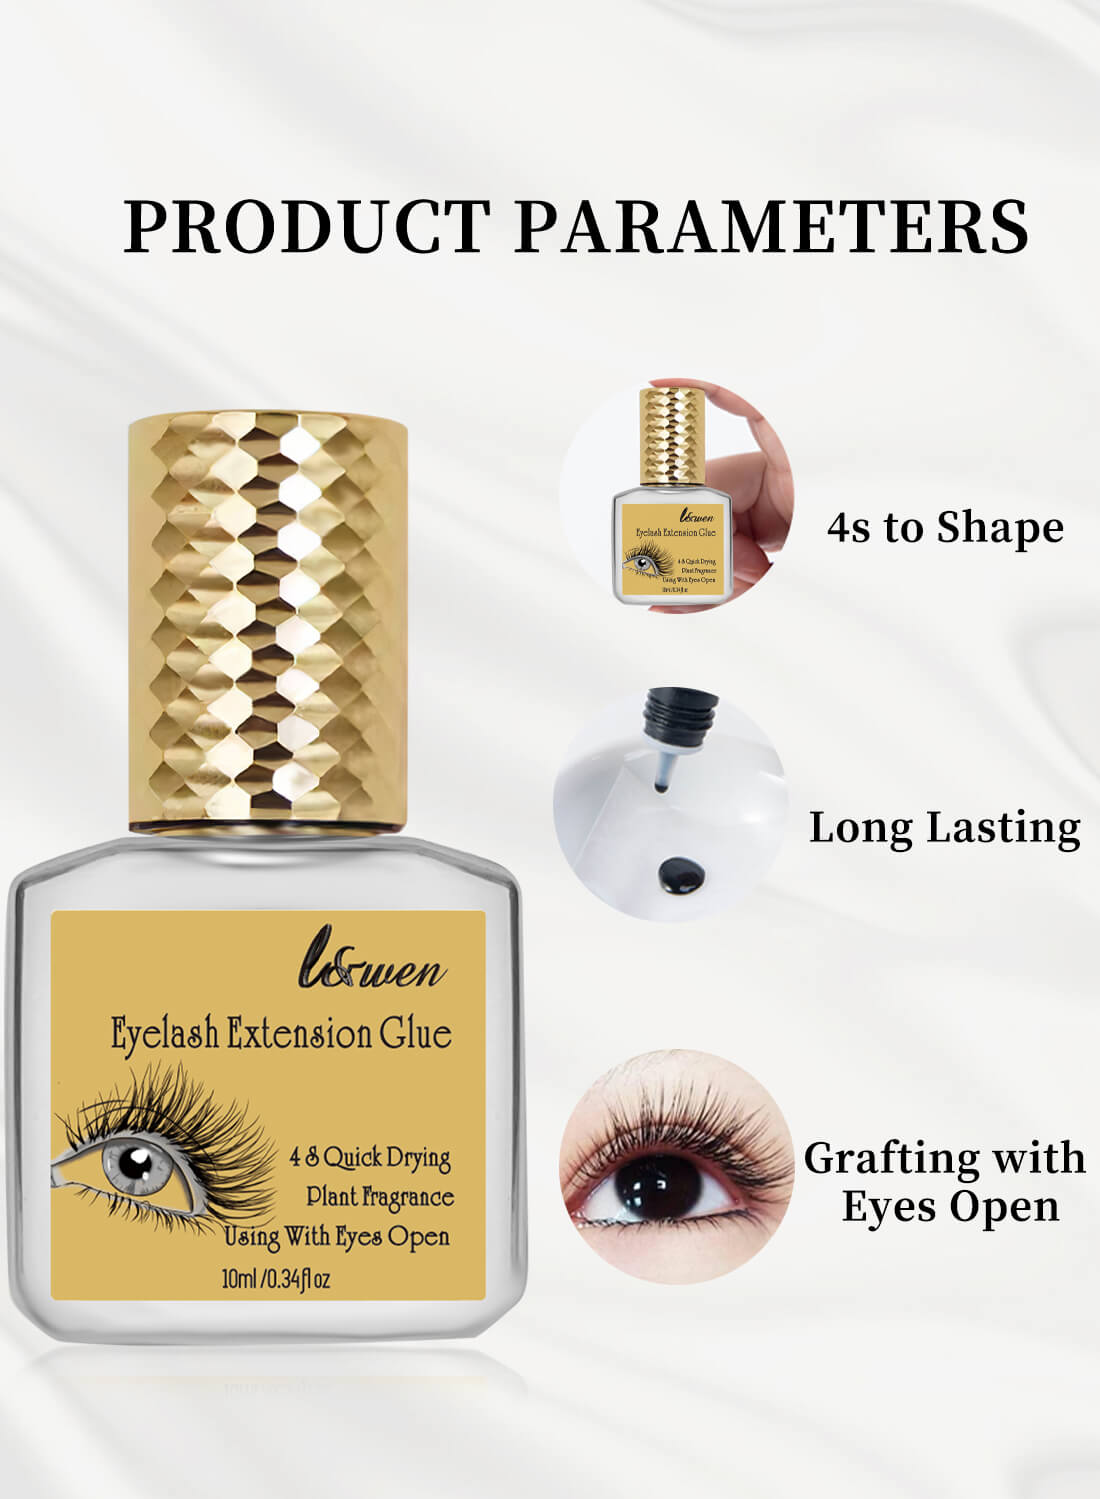 L&wen Eyelash Extension Glue Can Open Eyes 10ML